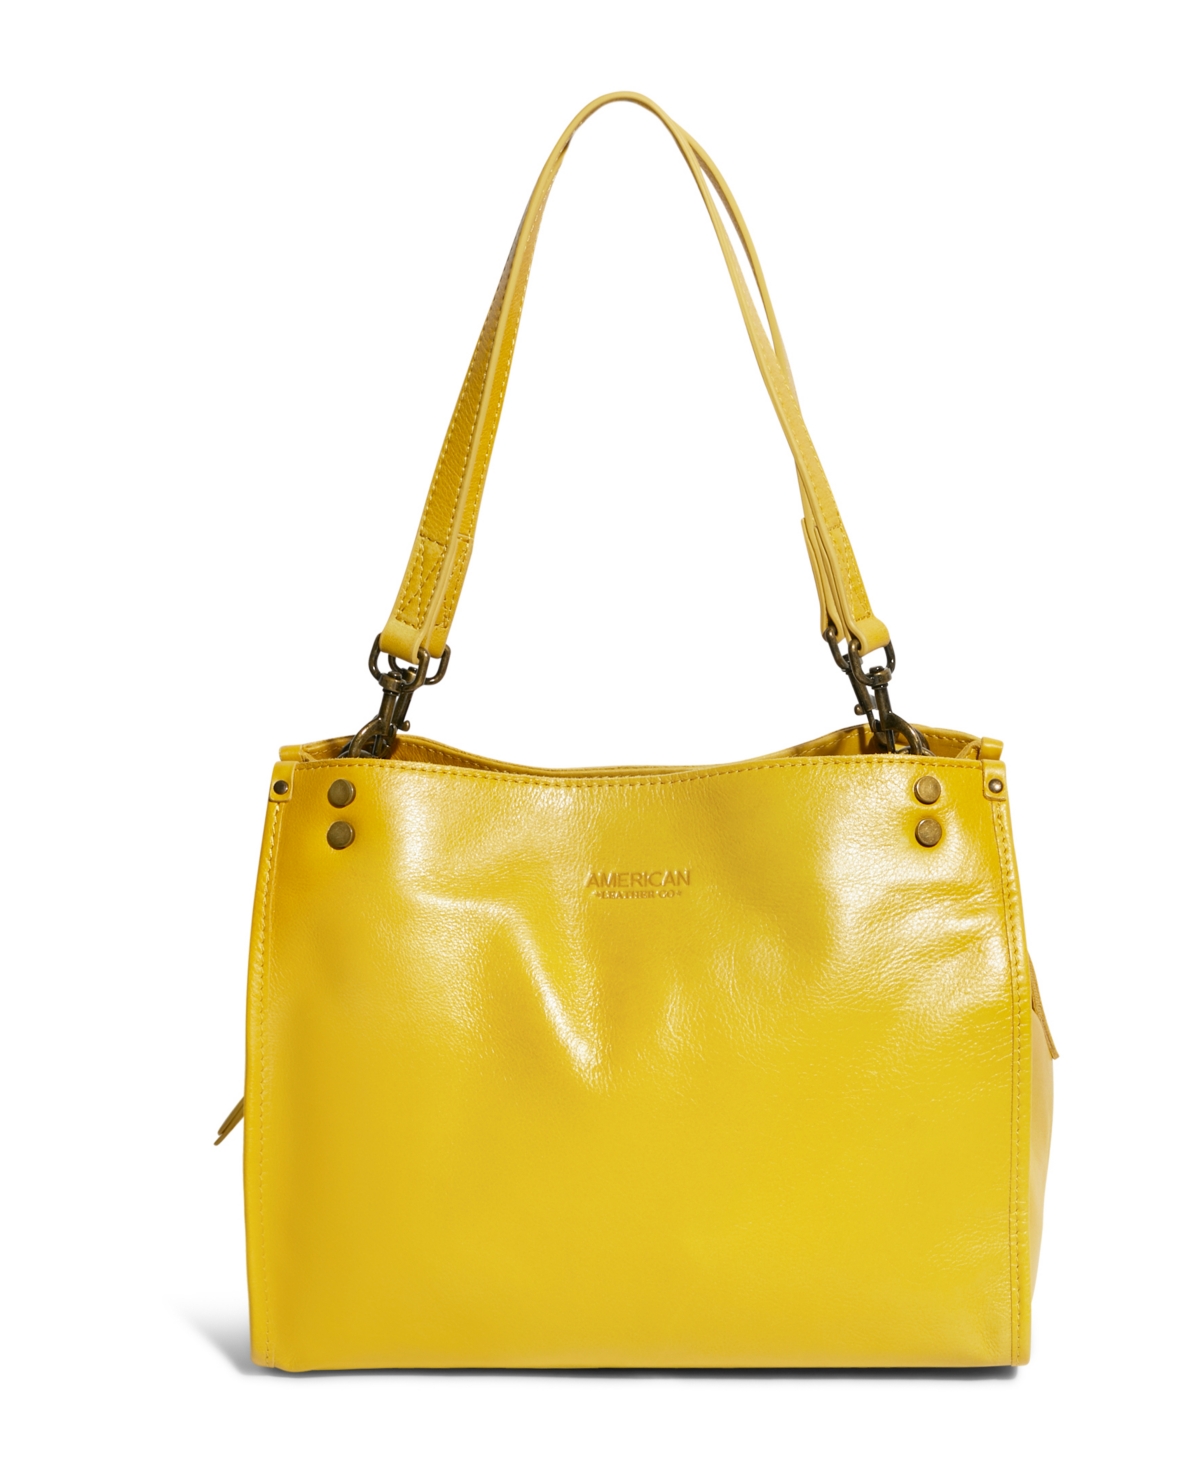 American Leather Co. Viv Hobo Bag In Daffodil Vintage